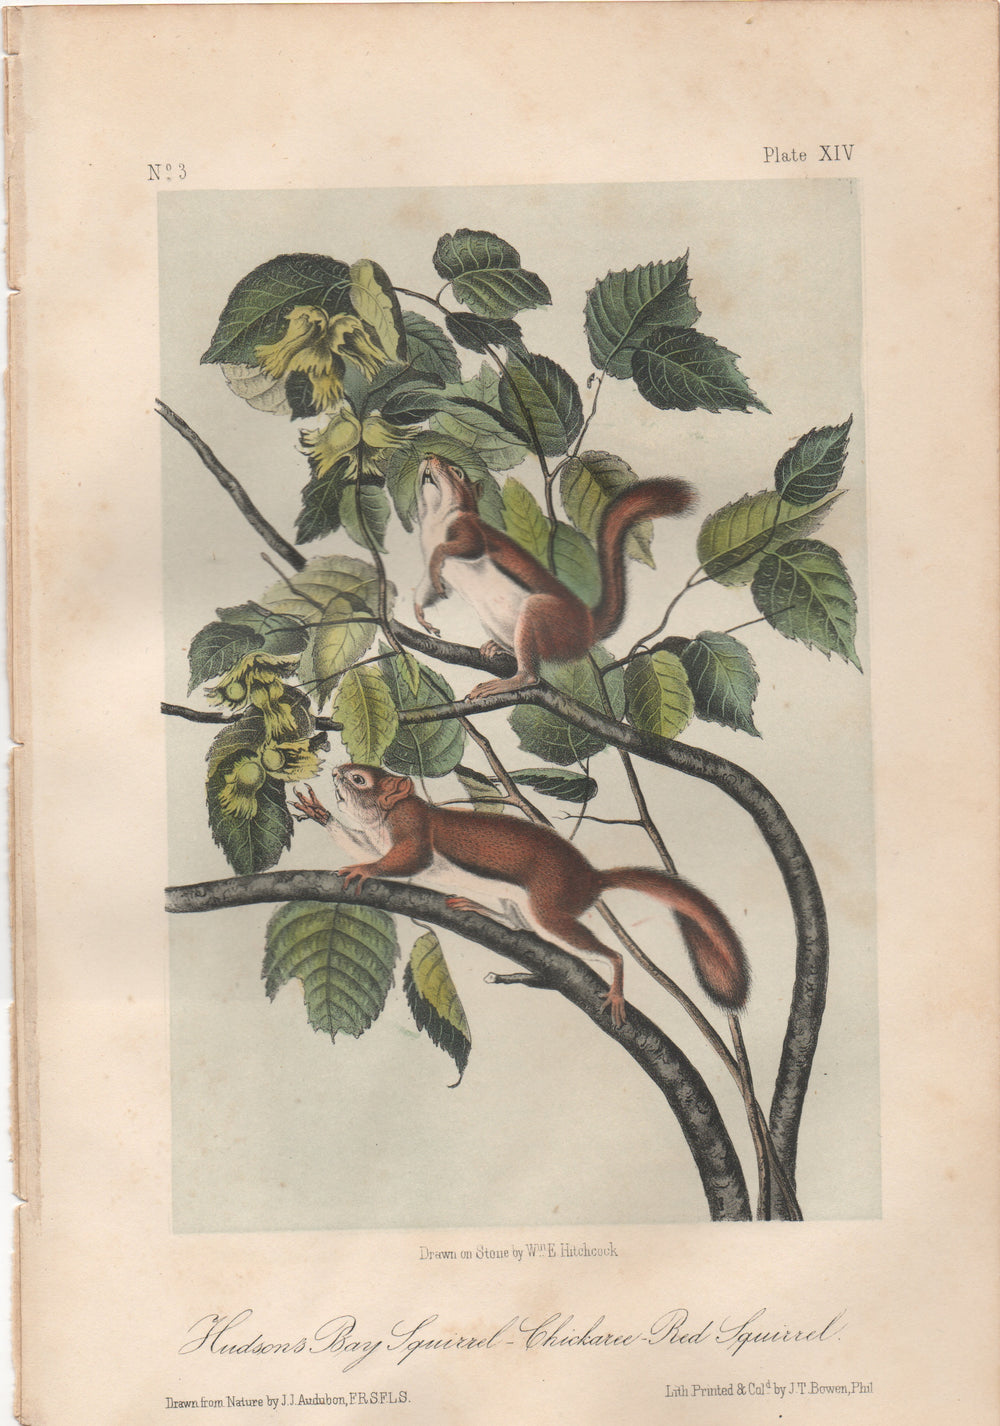 Audubon Original Octavo Mammal, Hudsons Bay Squirrel, plate 14